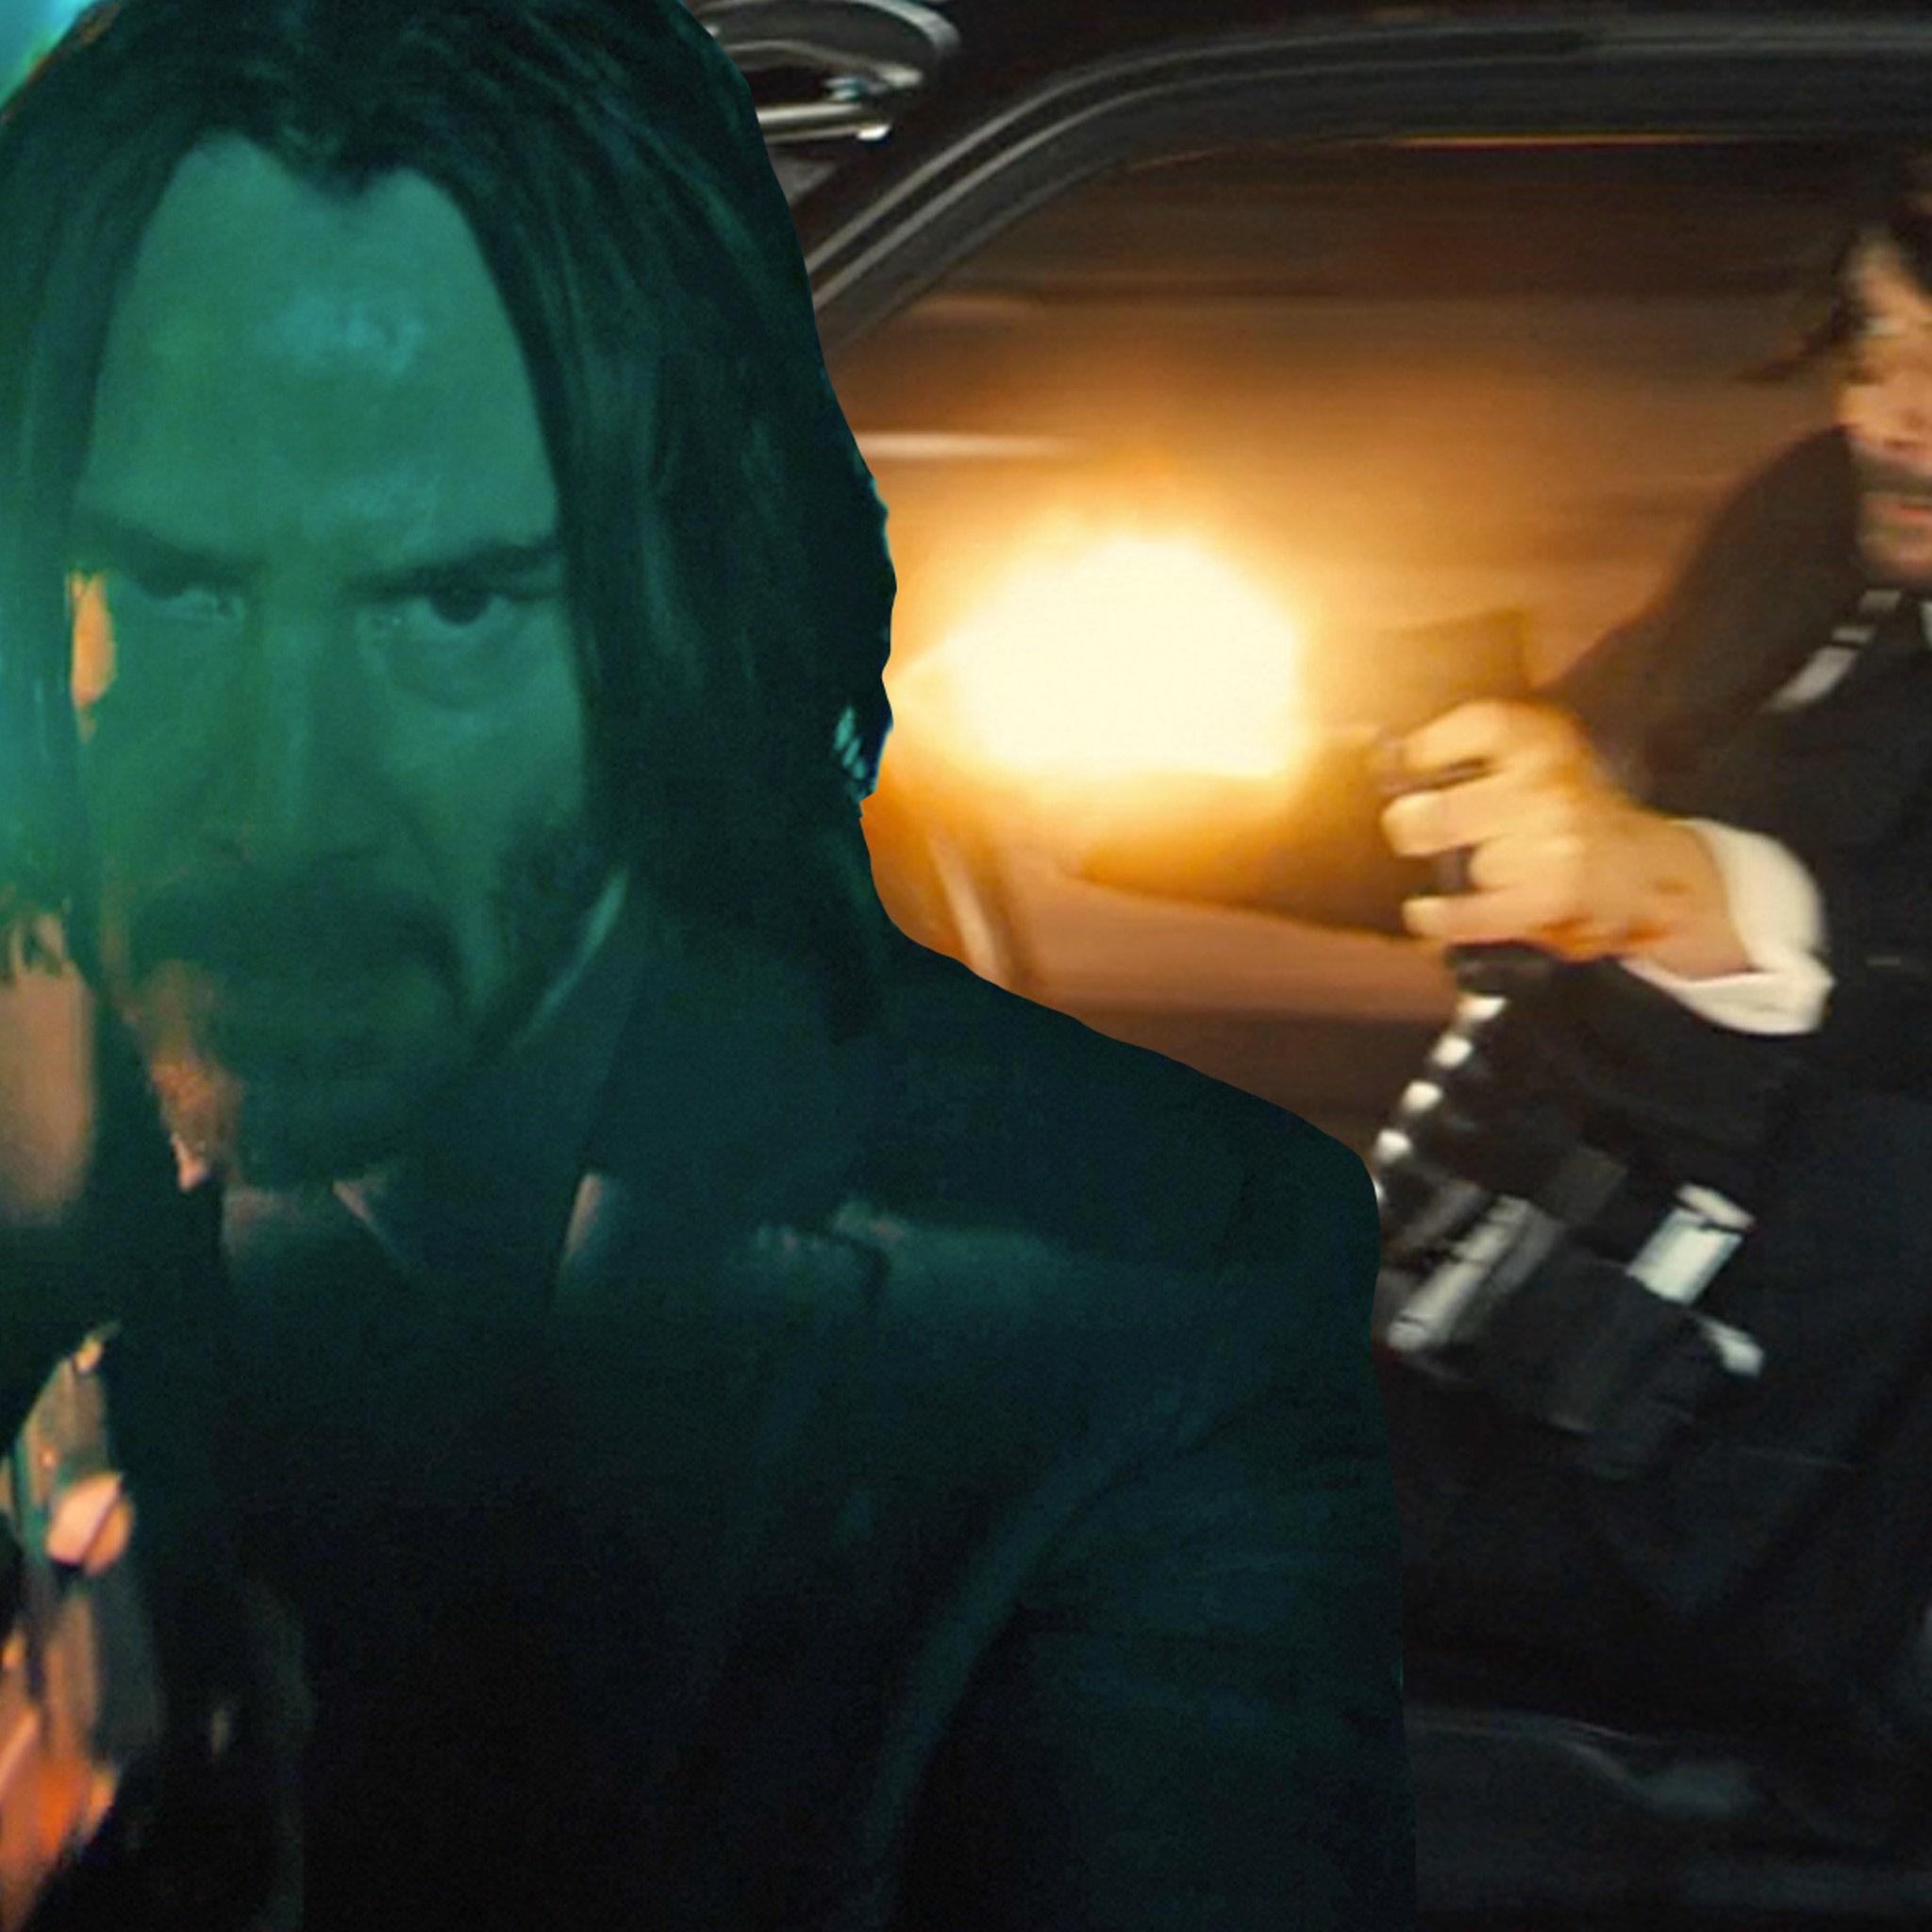 John Wick 4' Trailer: Keanu Reeves Kill for His Freedom